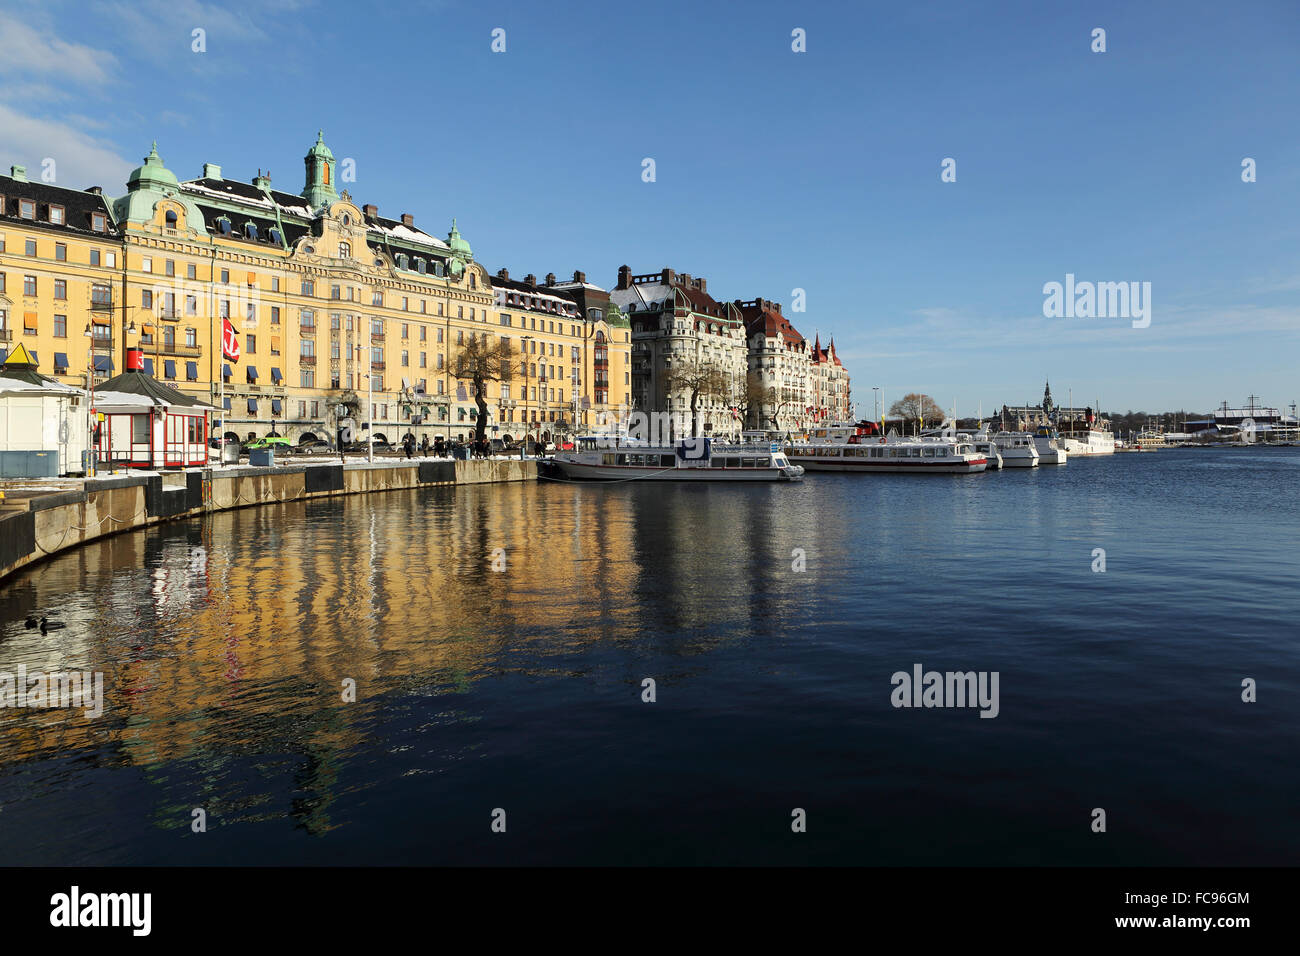 Waterfront buildings at Strandvagen, overlooking boats at Nybroviken, in Stockholm, Sweden, Scandinavia, Europe Stock Photo